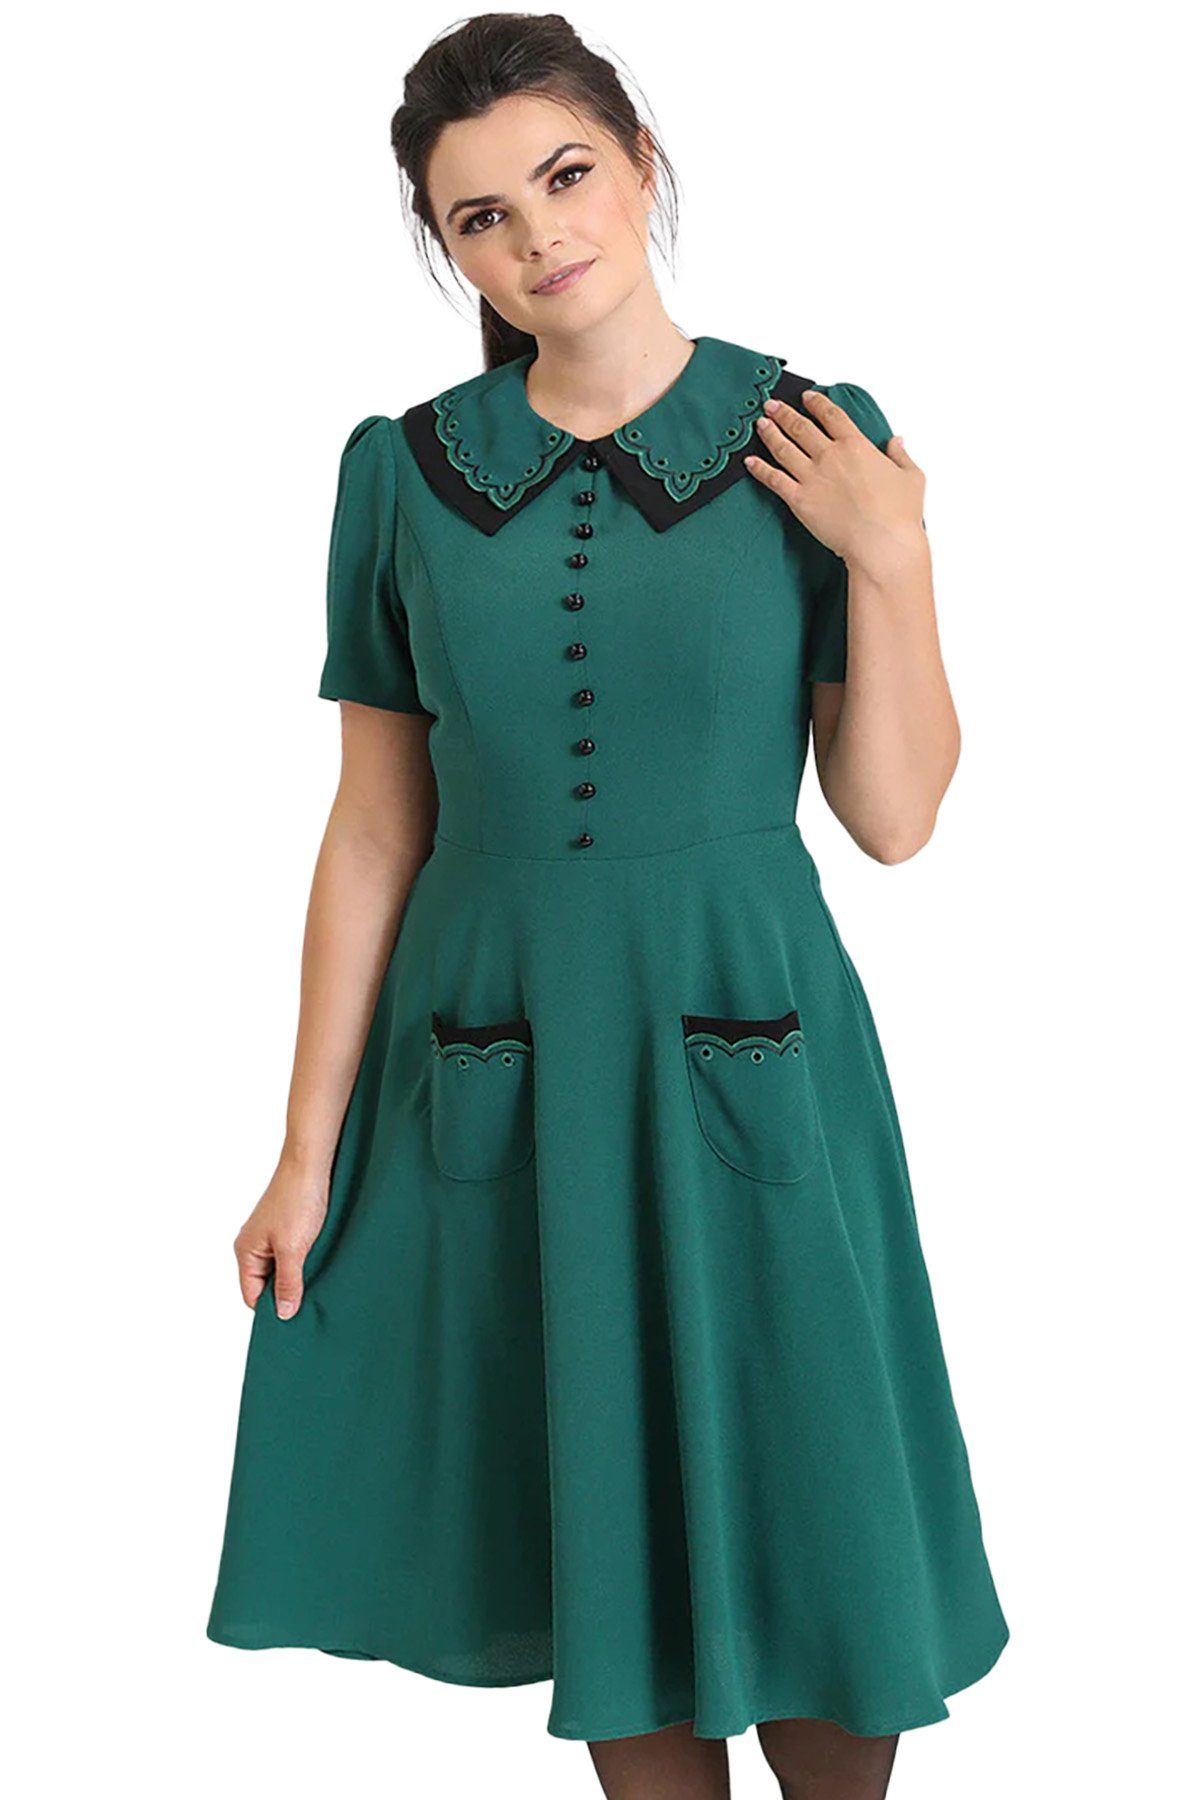 Hell Bunny A-Linien-Kleid Emily Dress Grün Retro Bubikragen 50s